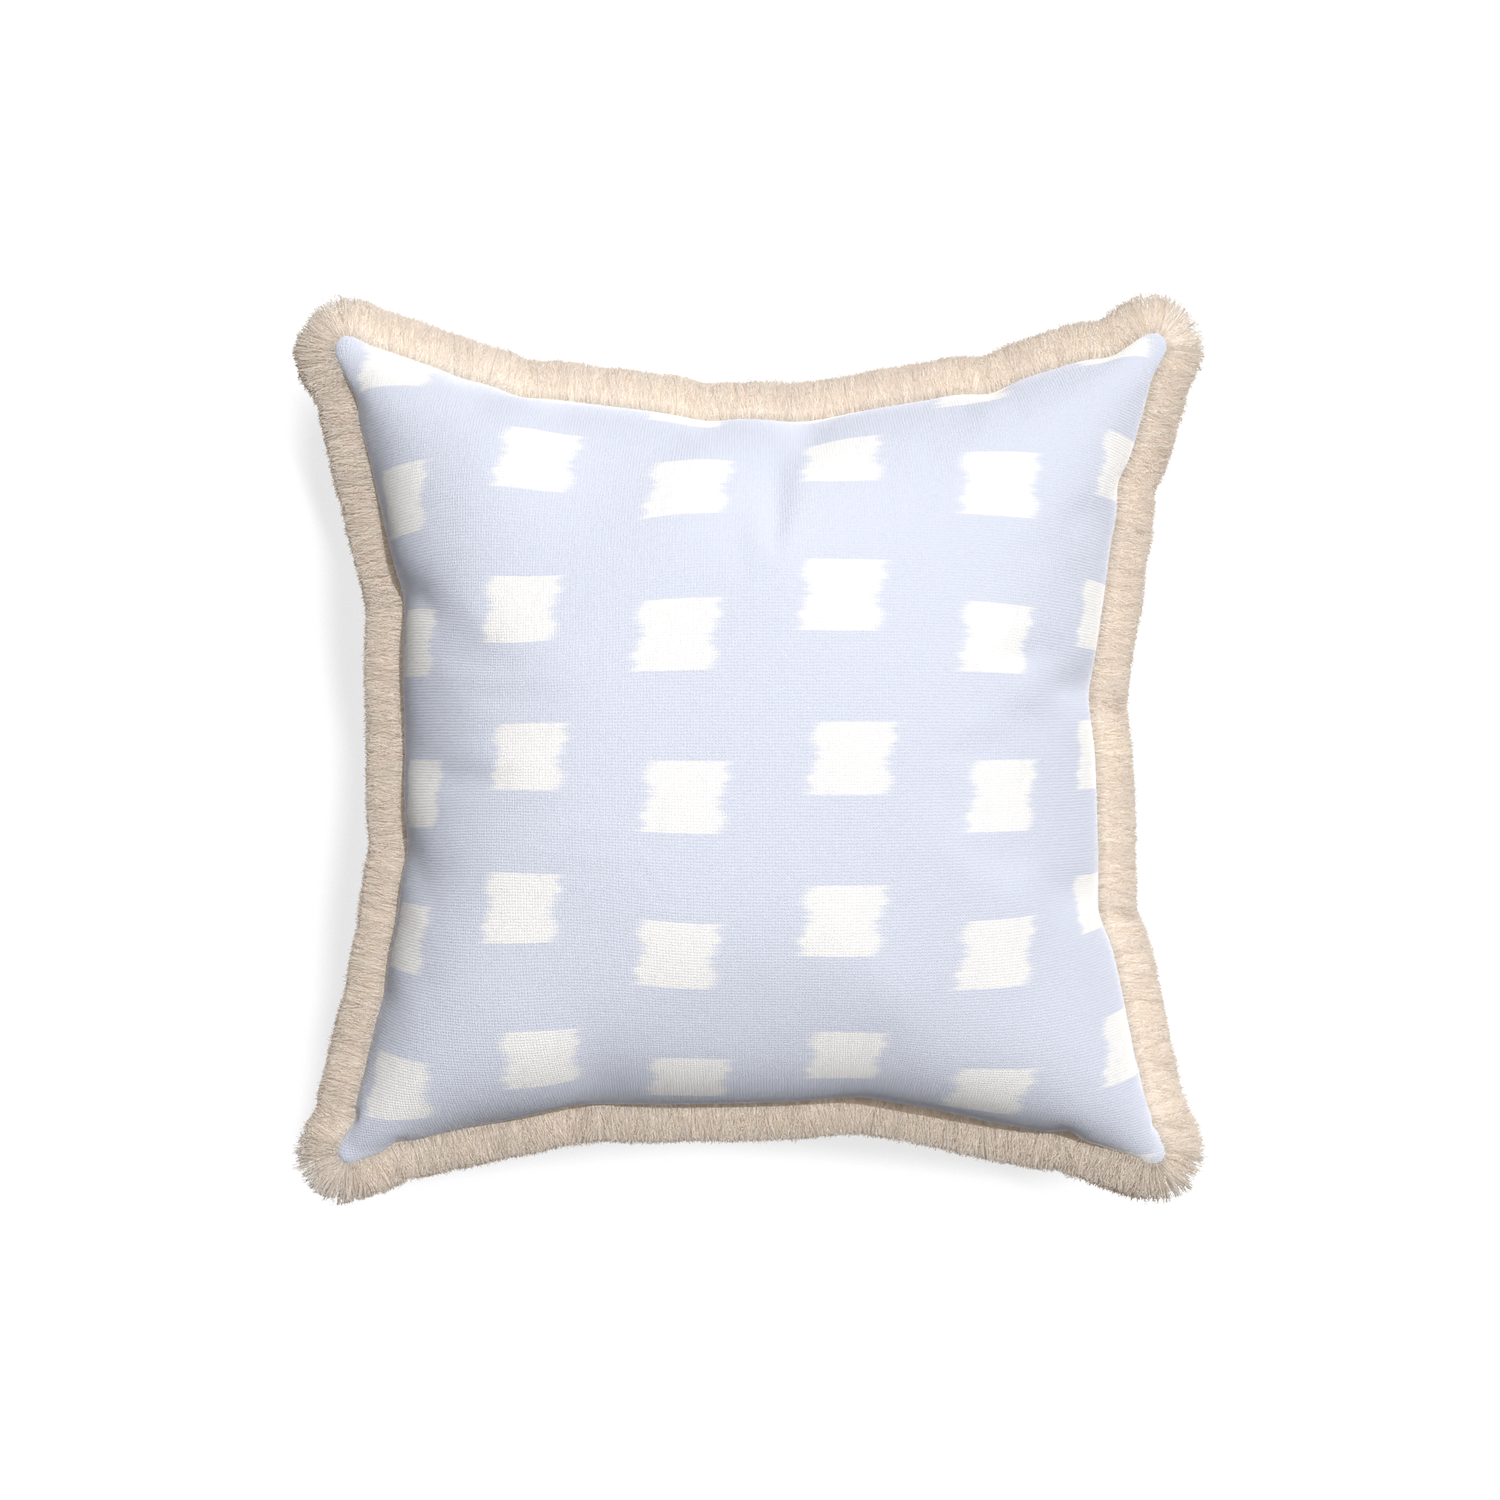 18-square denton custom sky blue patternpillow with cream fringe on white background